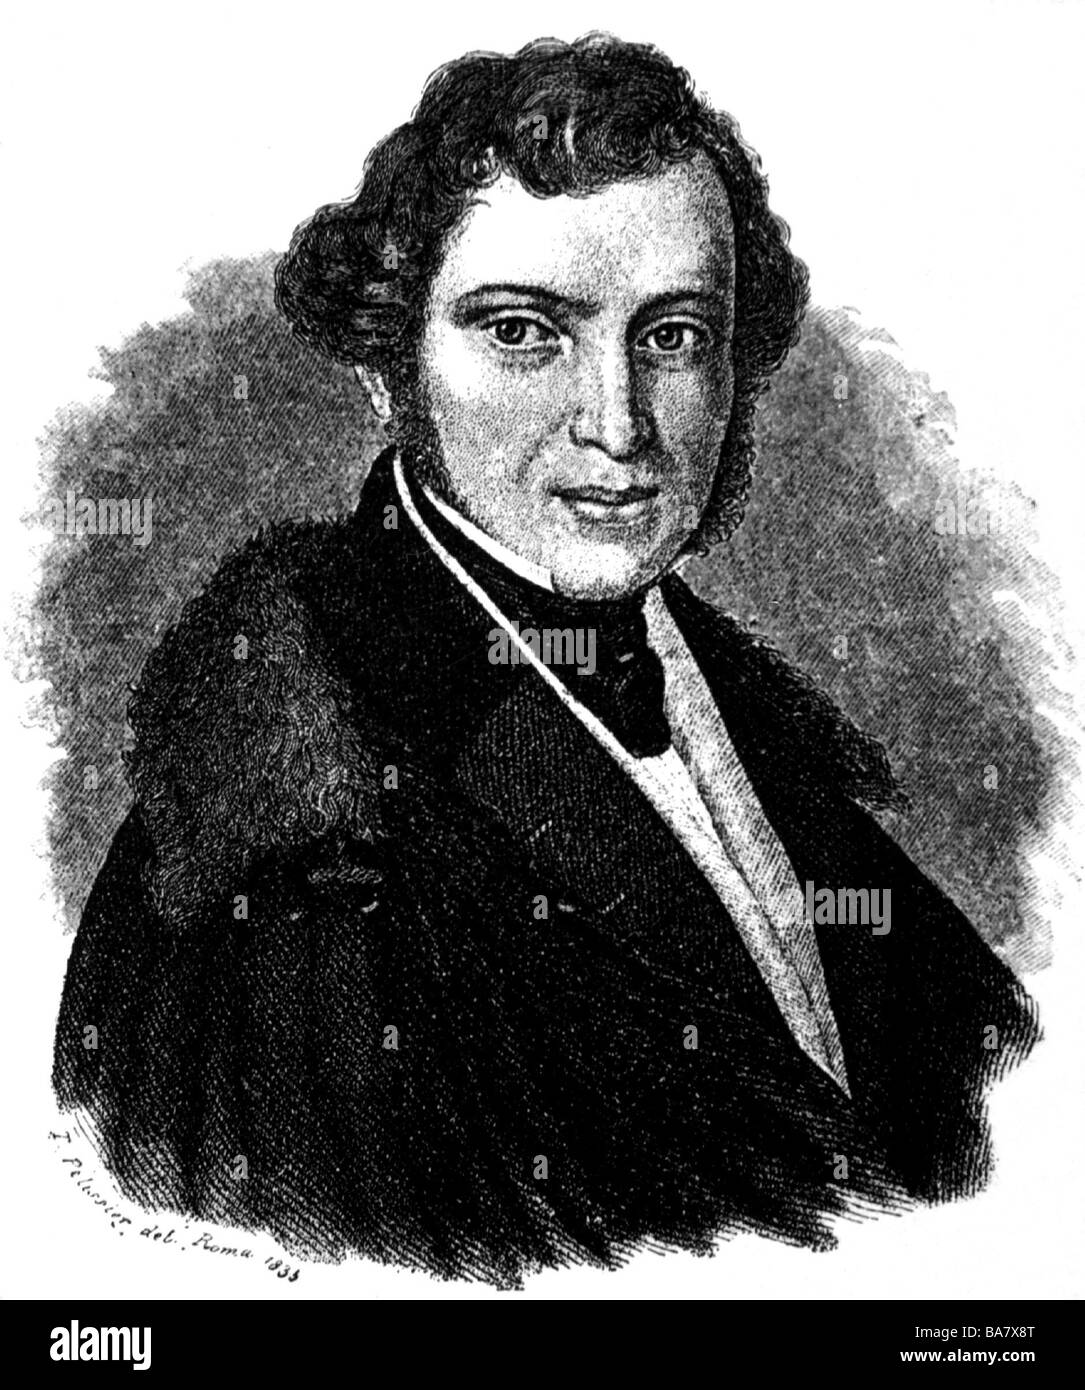 Auersperg, Anton Alexander count, 11.4.1806 - 12.9.1876, Austrian author / writer, portrait, after painting by T. Pelissier, 1835, Stock Photo